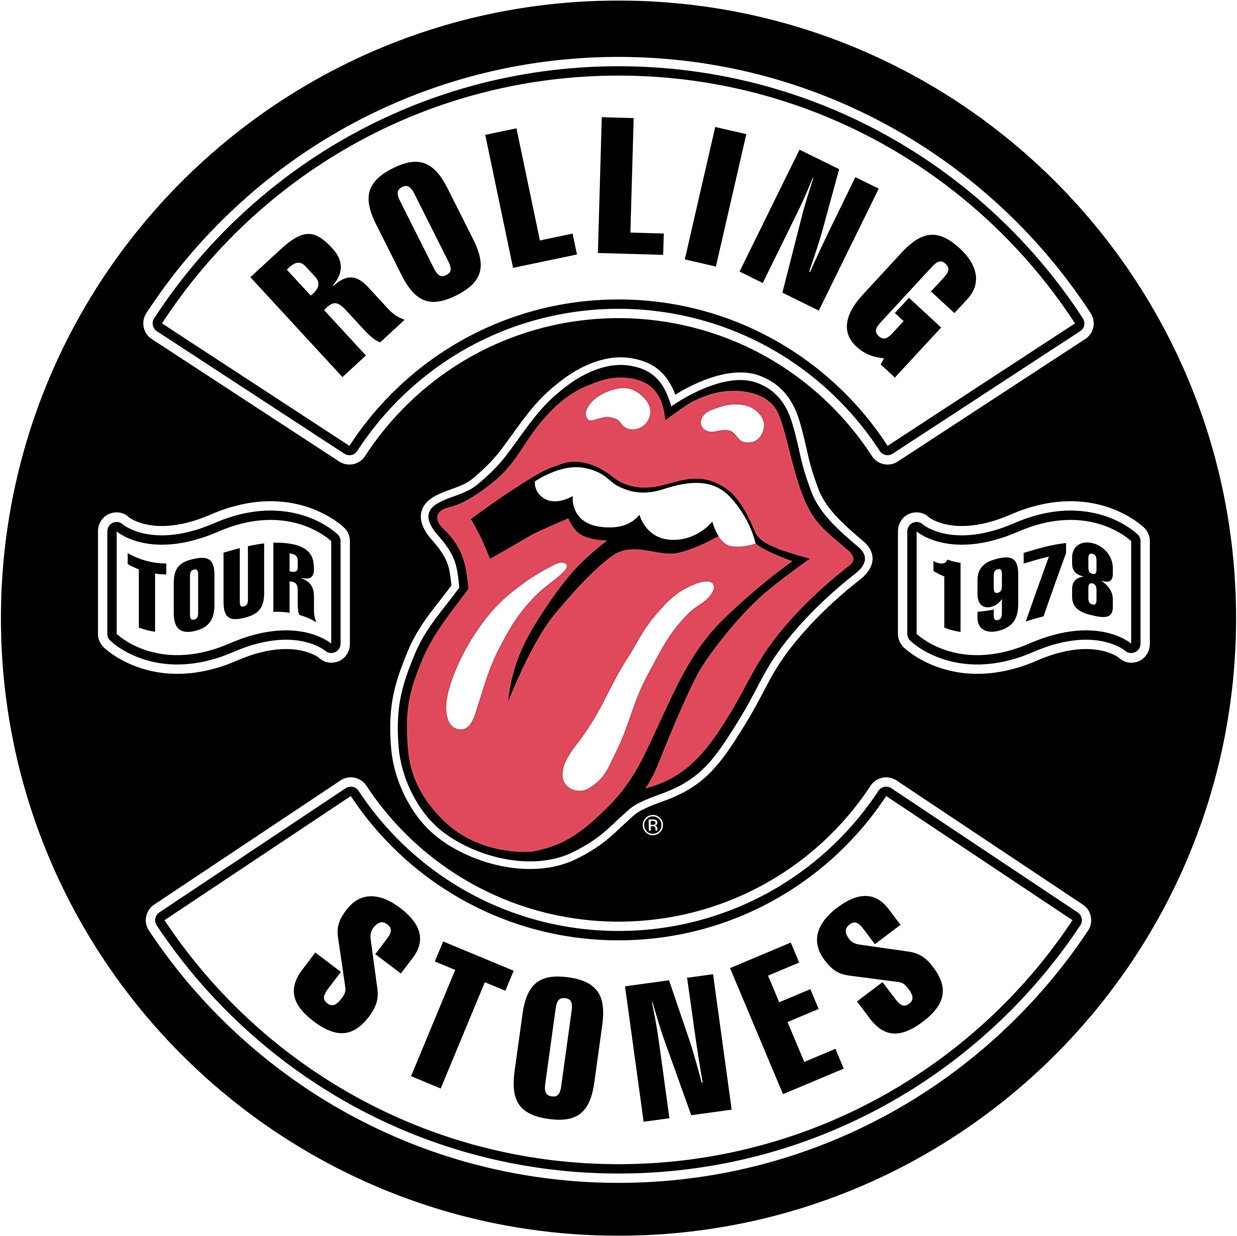 Correctif The Rolling Stones Tour 1978 Correctif